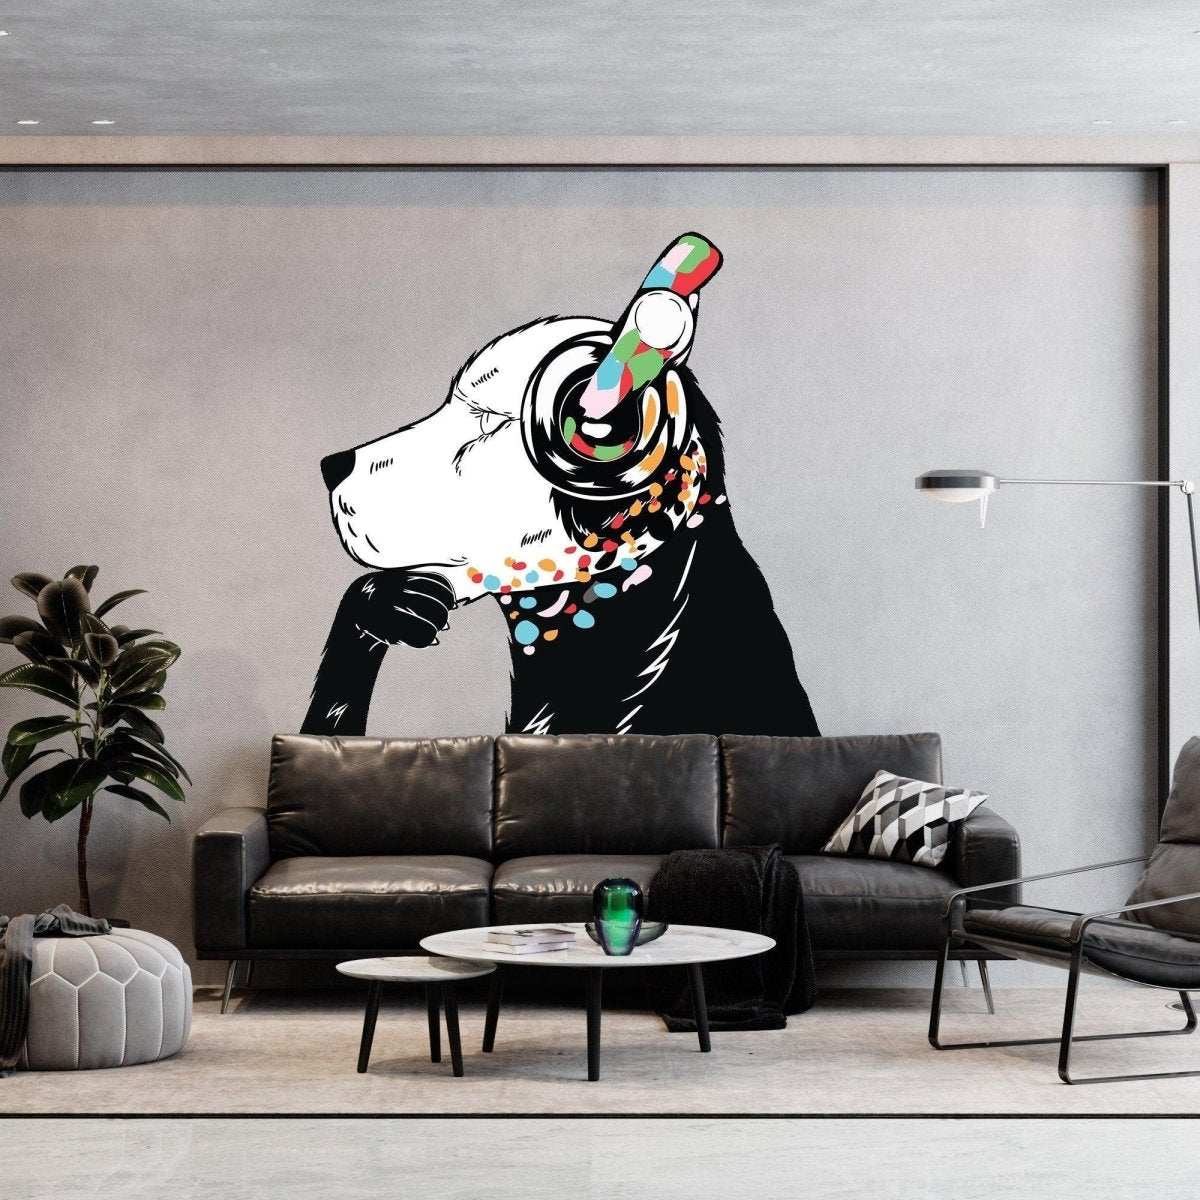 Thinking Dog Sticker - Banksy Inspired Vinyl Wall Decal